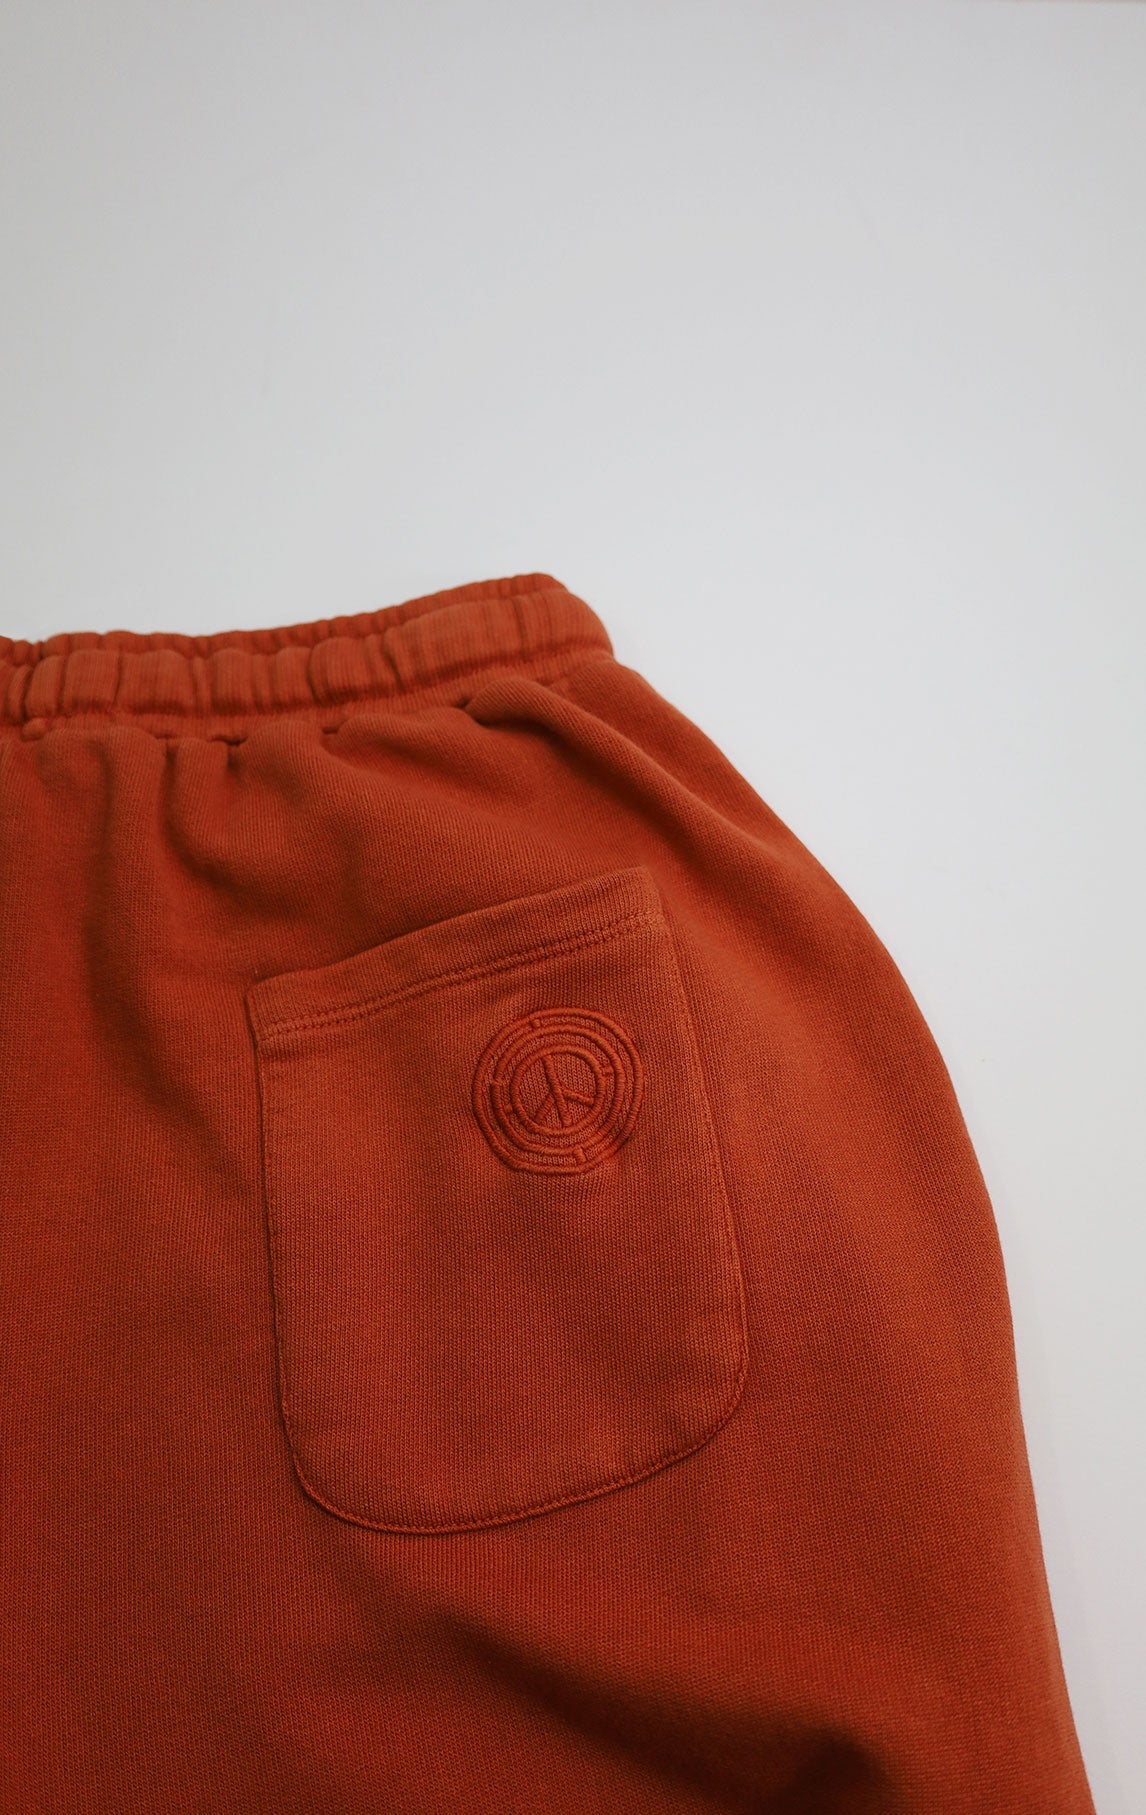 Dark orange EVIE jogging pants made of organic cotton from Komodo